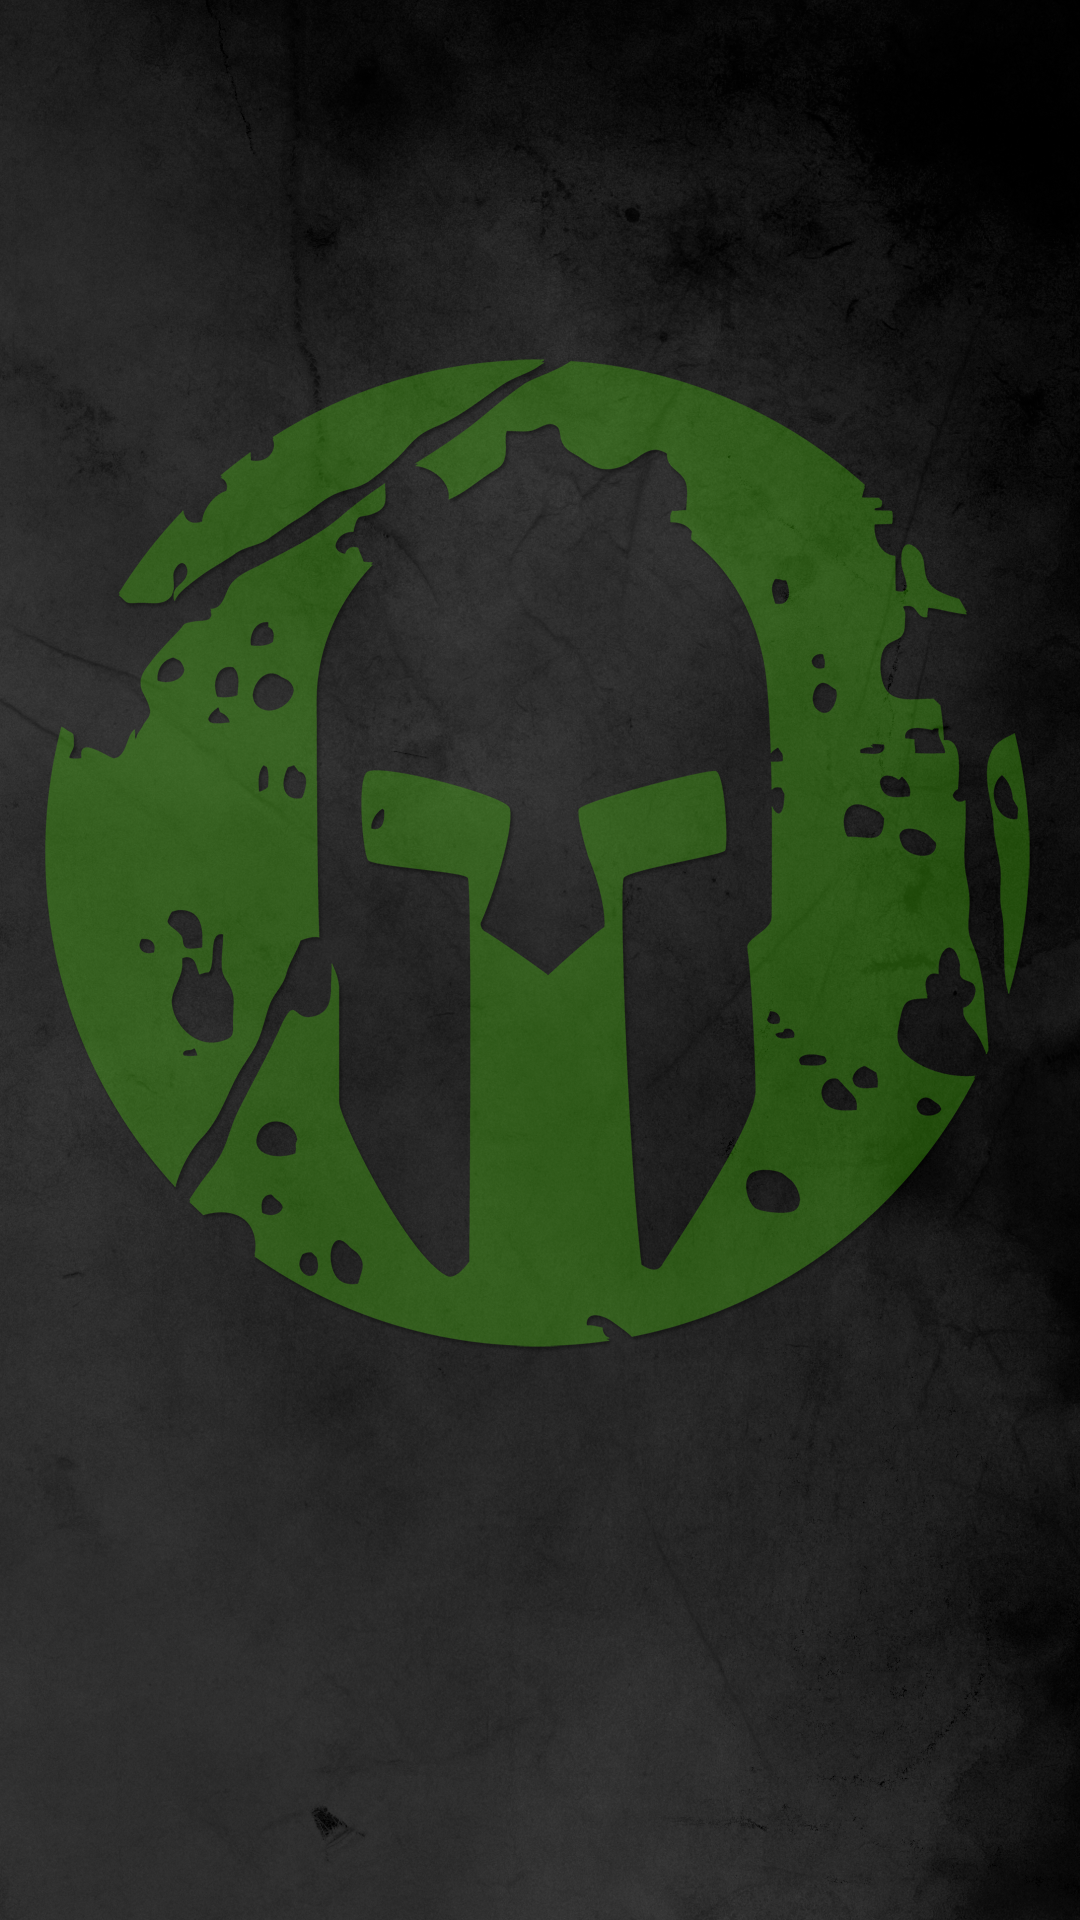 spartan race wallpaper,green,t shirt,logo,font,illustration